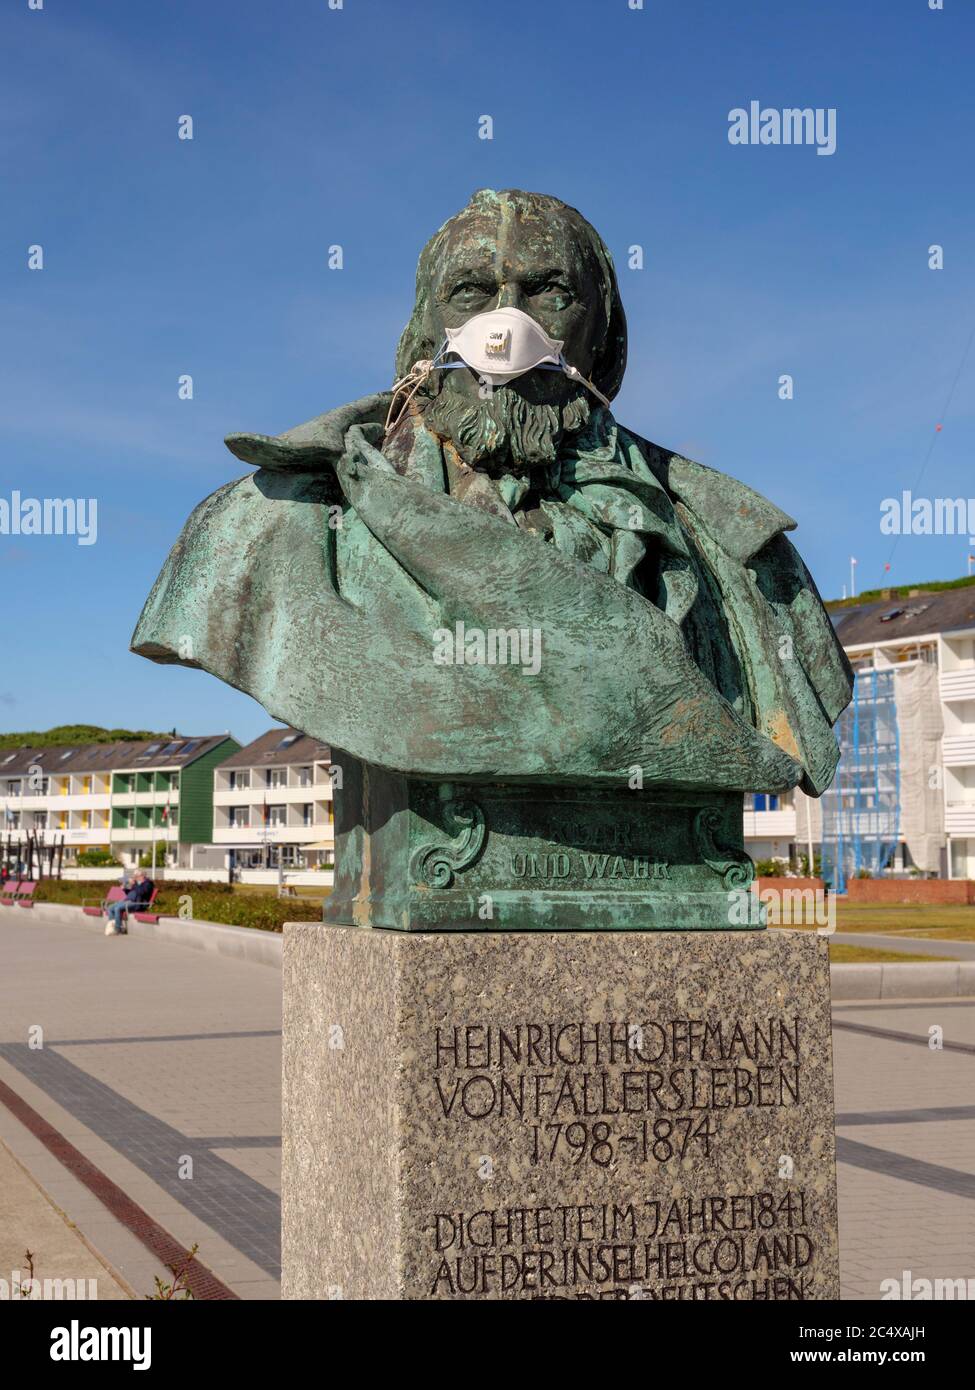 Monumento Hoffmann von Falersleben con máscara de filtro, Unterland, isla Helgoland, distrito Pinneberg, Schleswig-Holstein, Alemania, Europa Foto de stock